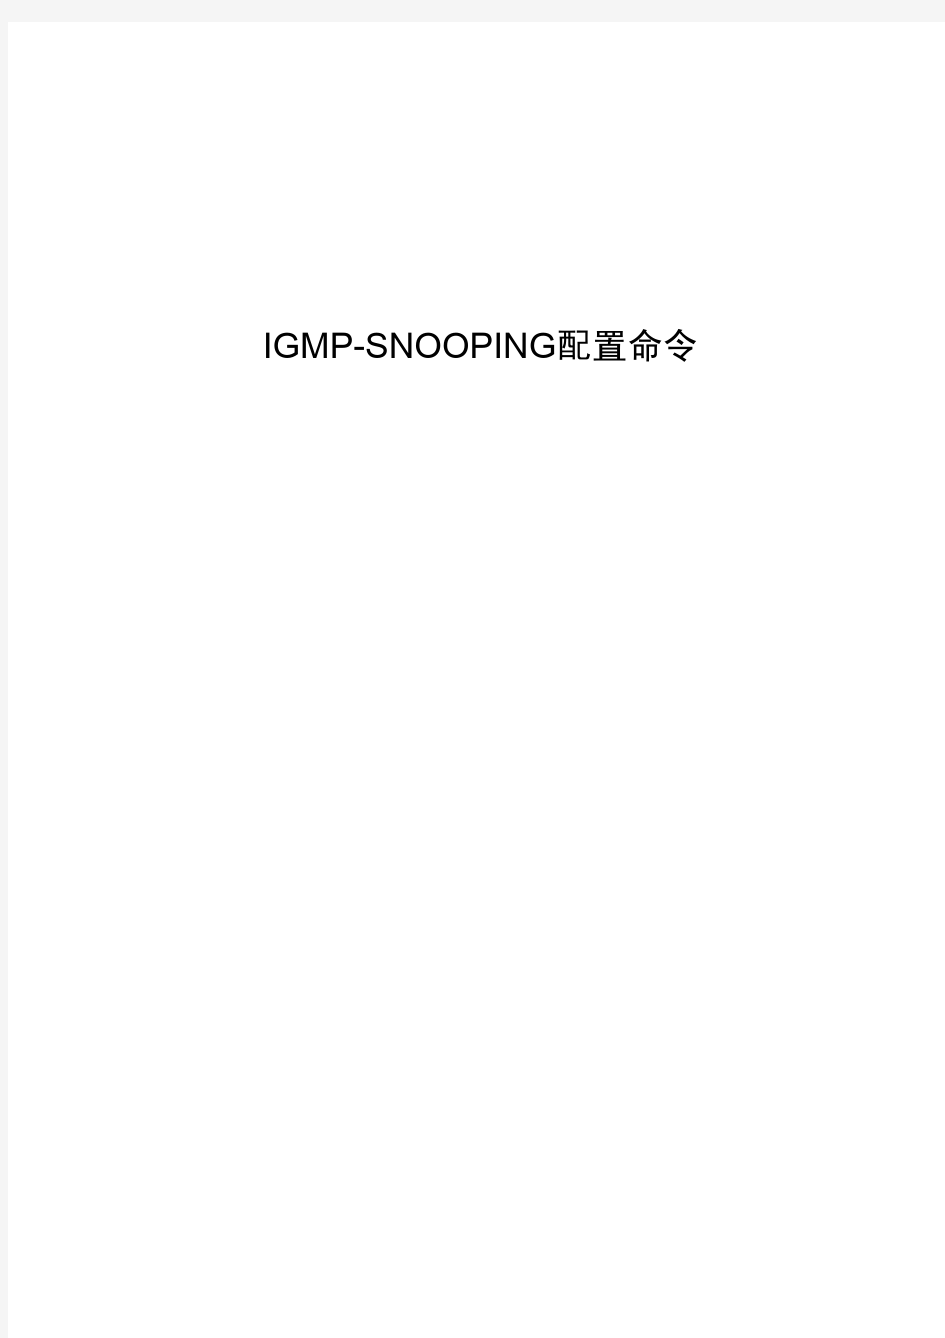 博达交换机-IGMP-snooping配置命令